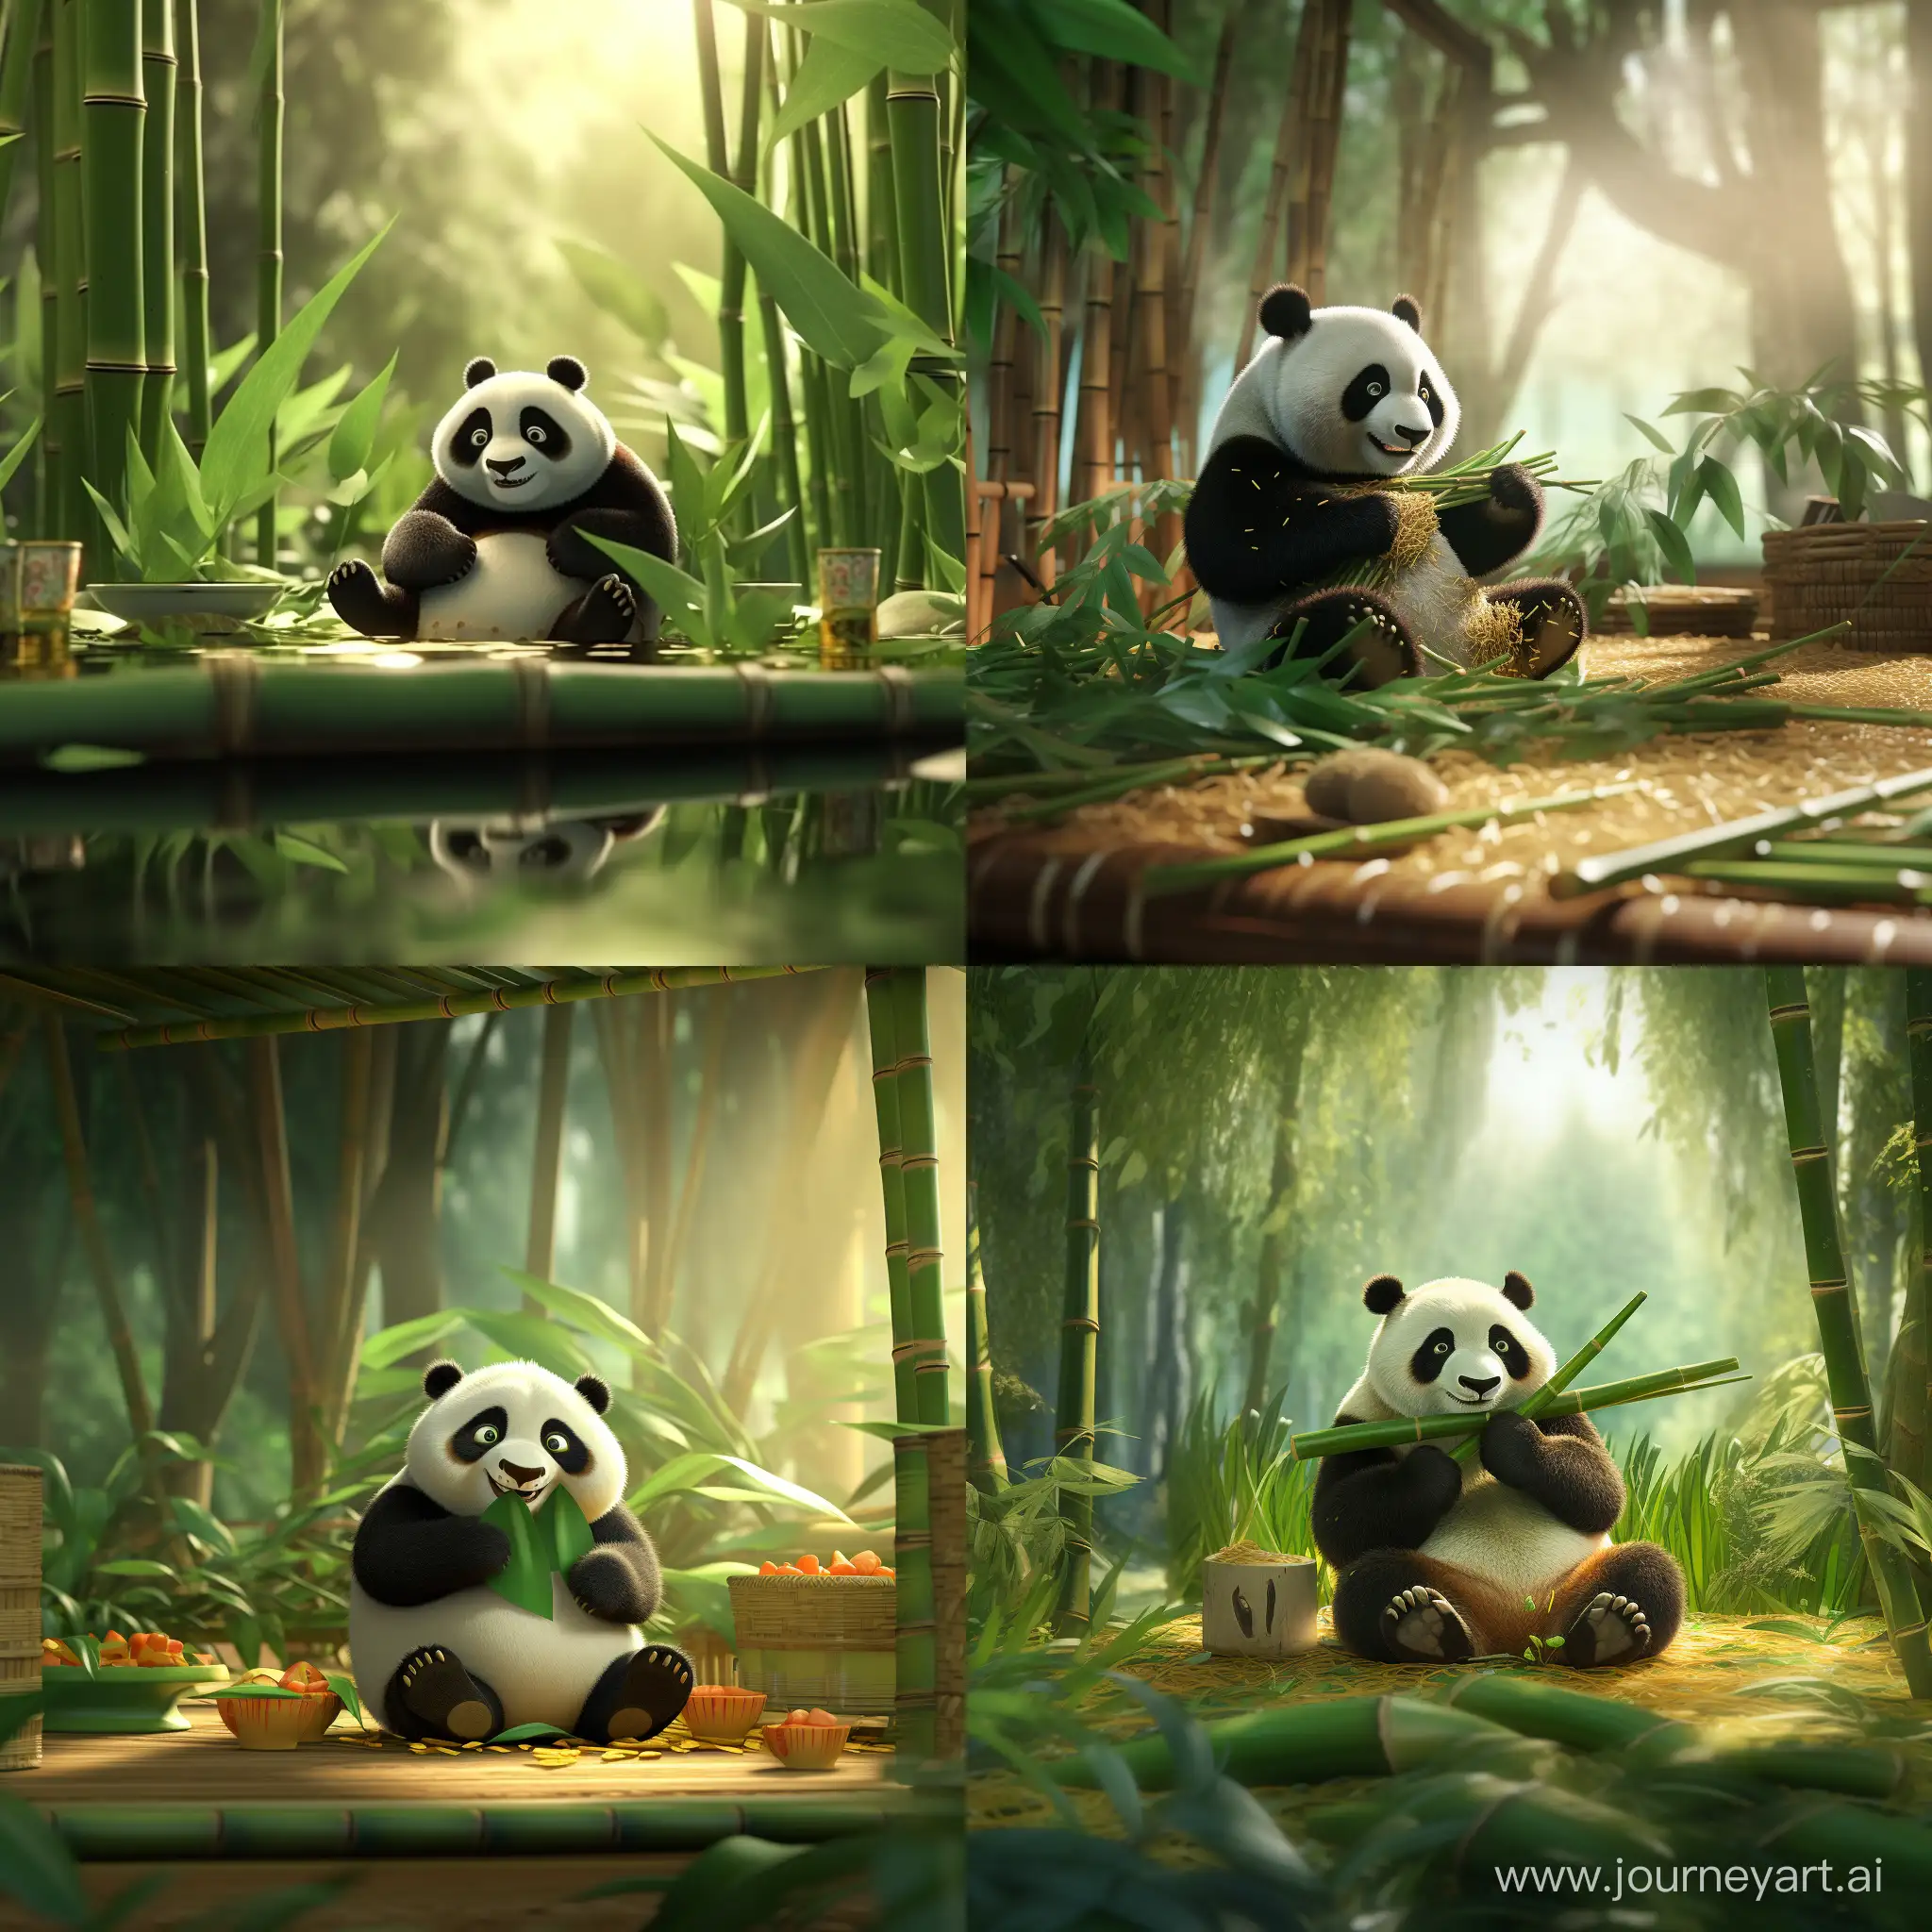 Panda-Enjoying-Dumplings-in-Serene-Bamboo-Forest